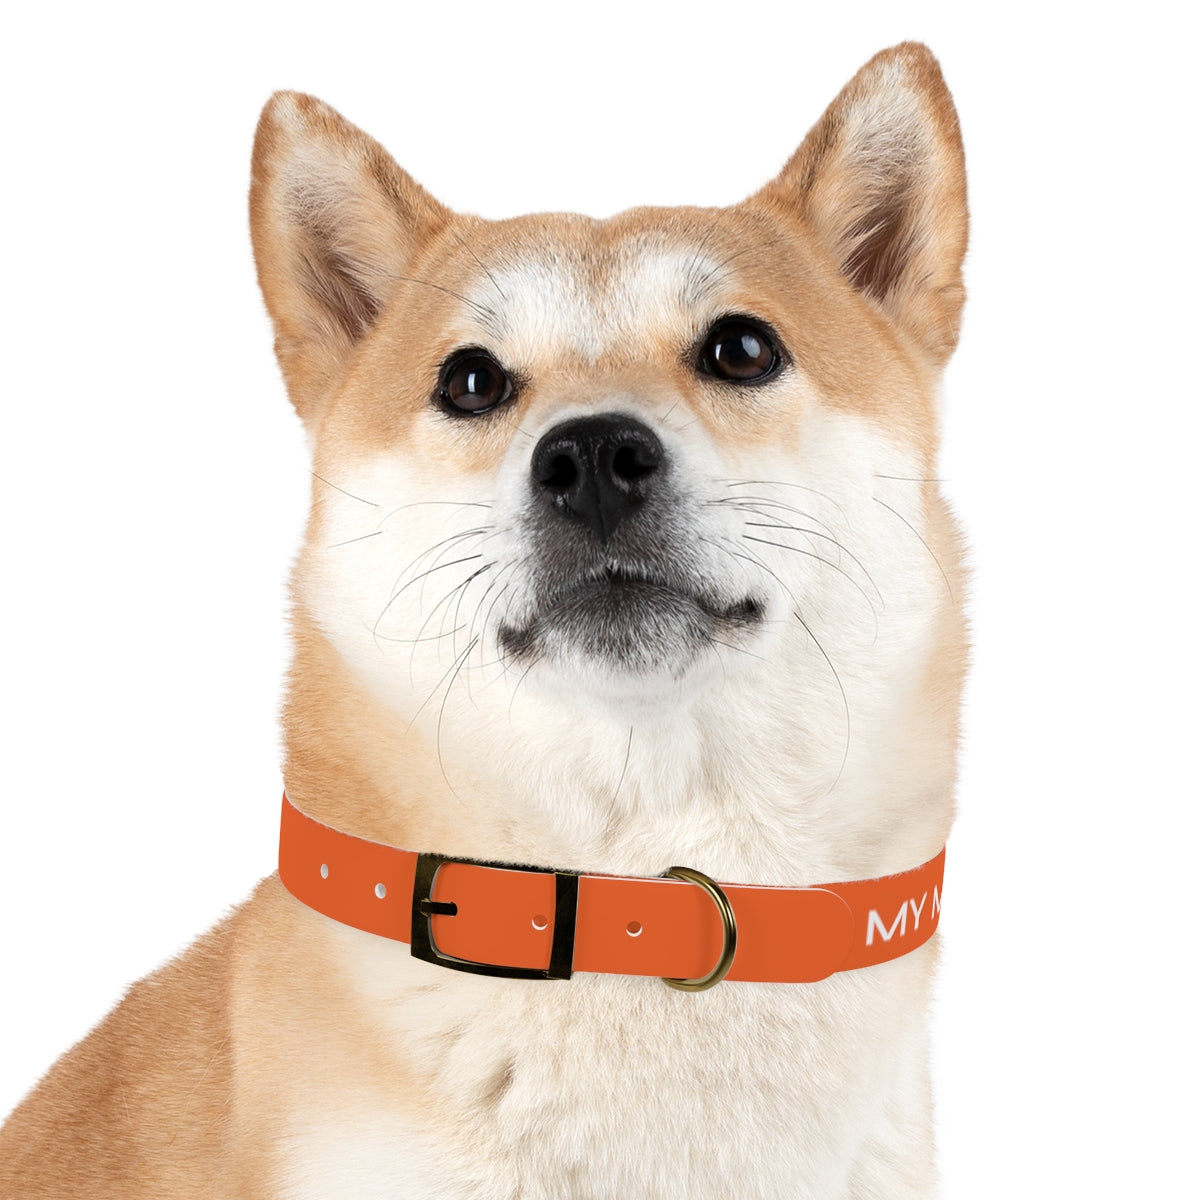 Dog Collar - My Mom Sells Houses - Orange